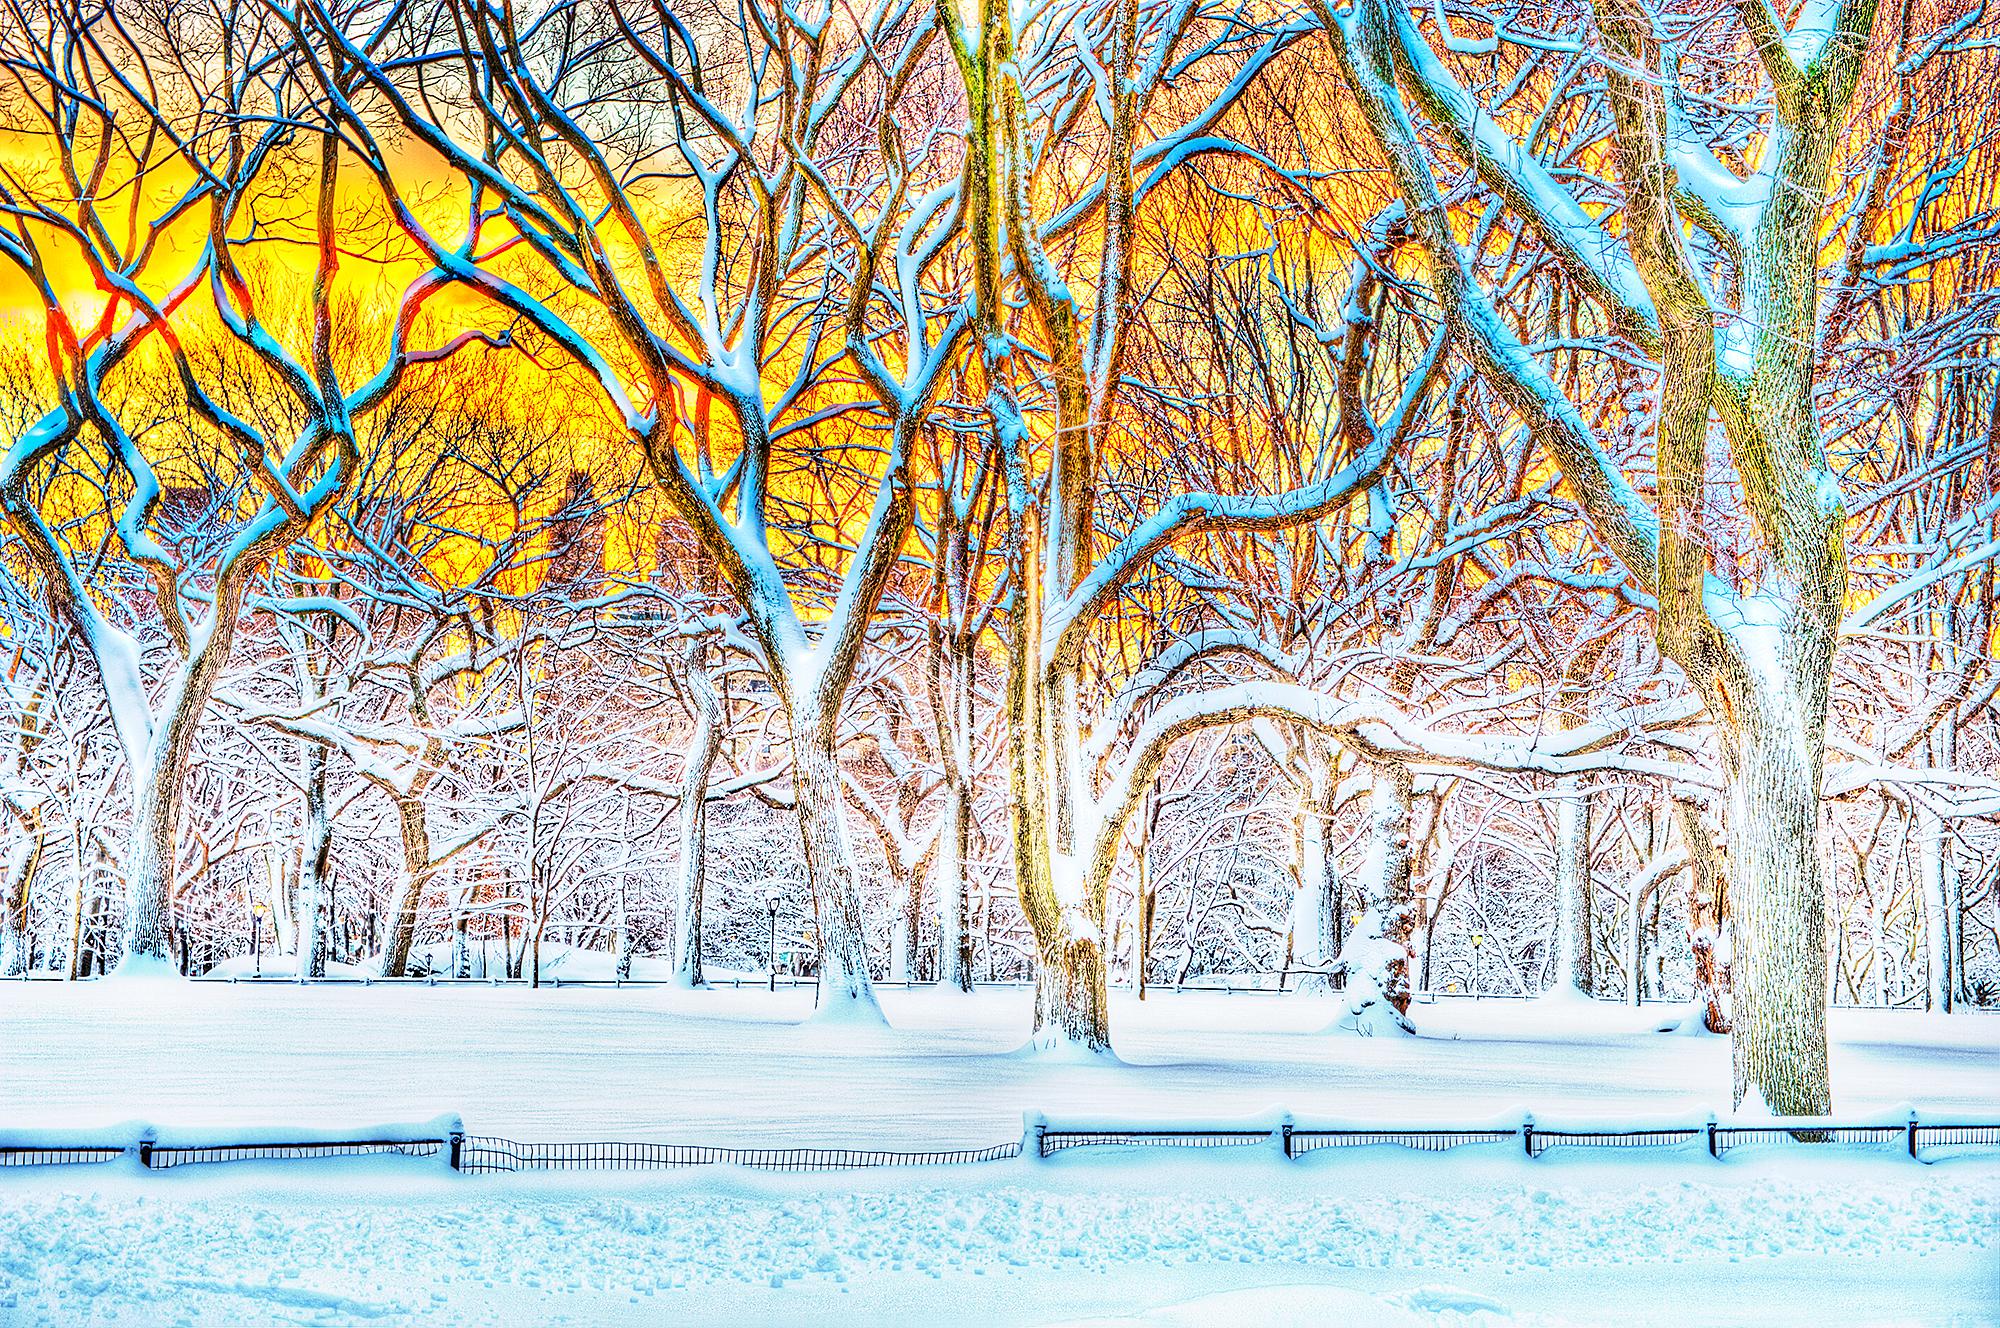 Mitchell Funk Landscape Photograph - Central Park Winter Scene,  Charles Burchfield-esque Landscape